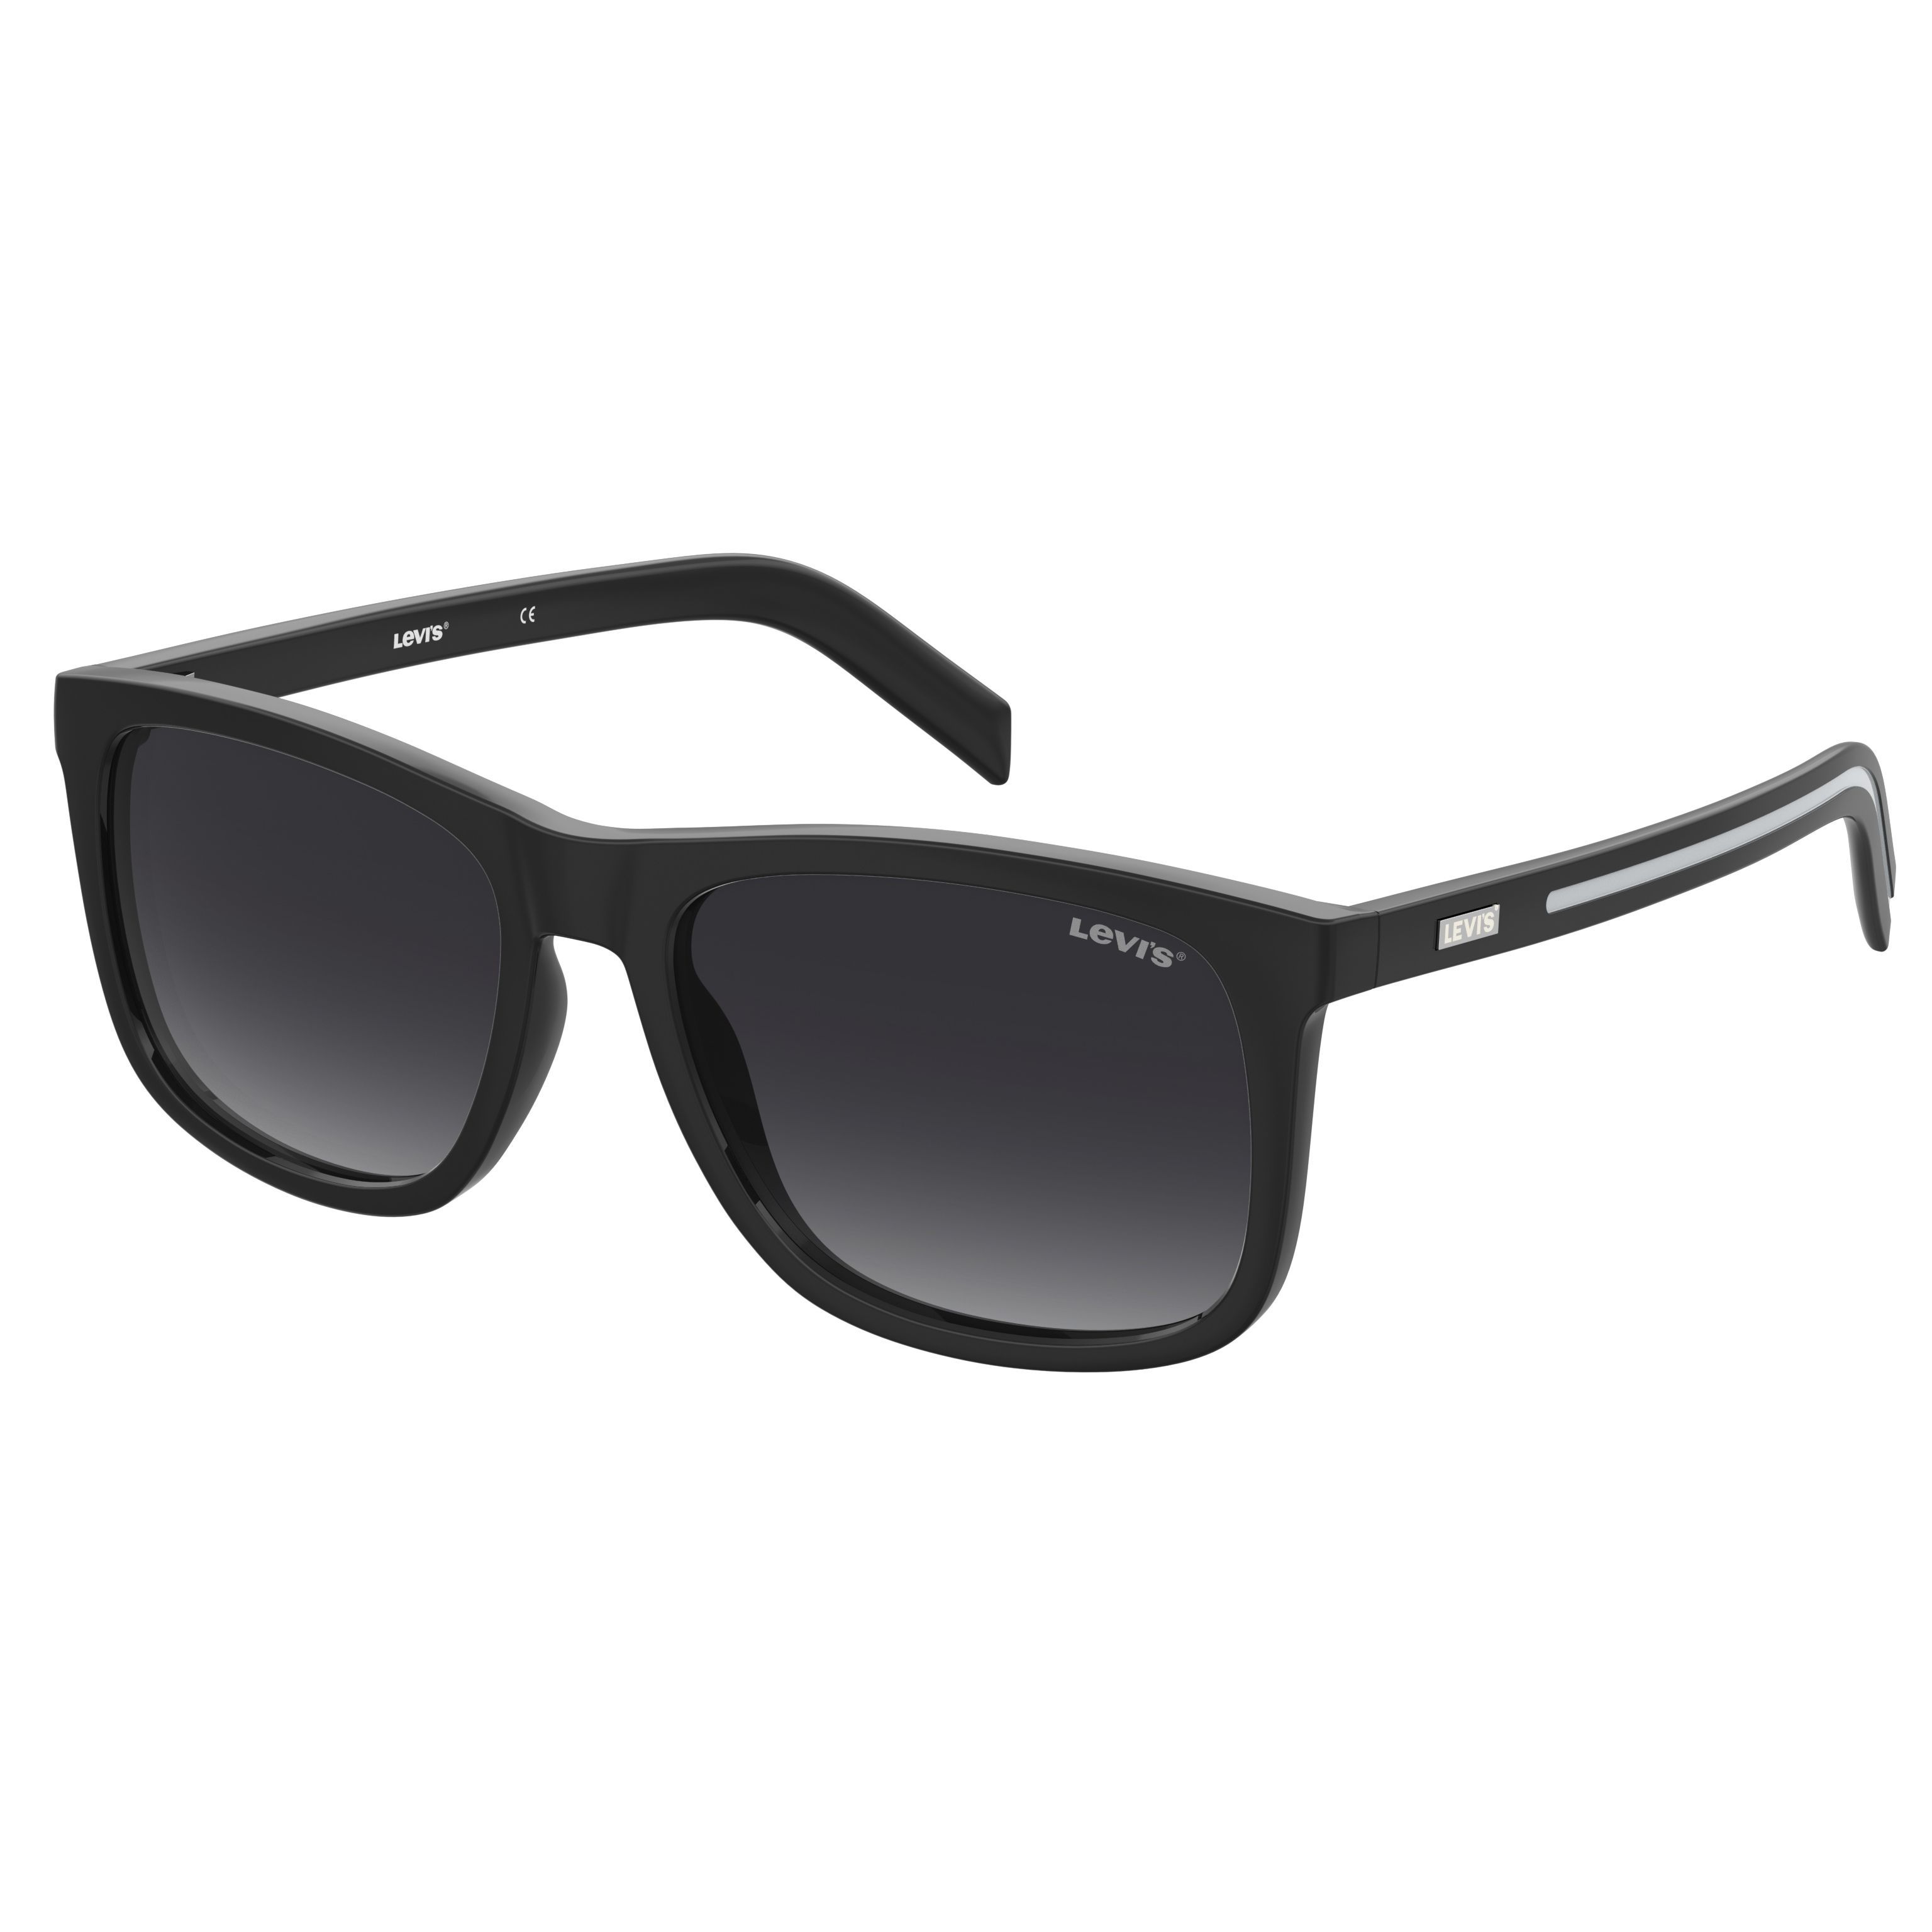 LV 5025 S Square Sunglasses 807 9O - size 56